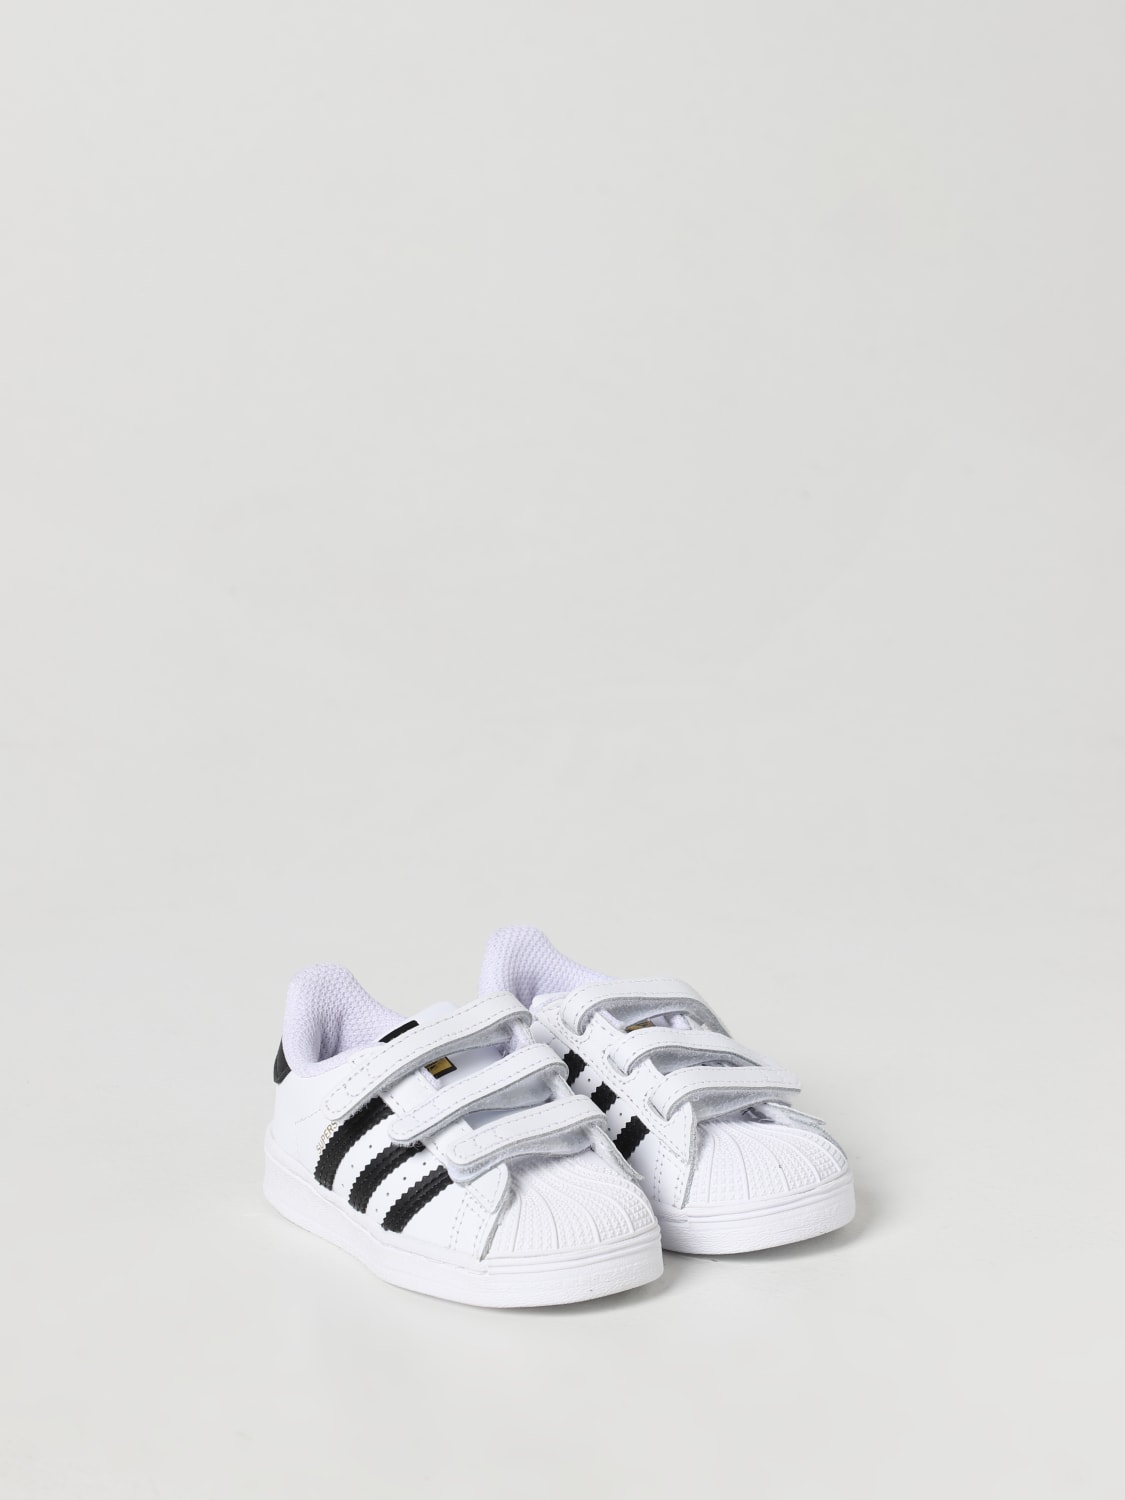 Behoren Voorspeller Nauw ADIDAS ORIGINALS: Jungen Schuhe - Weiß | Adidas Originals Schuhe EF4842  online auf GIGLIO.COM